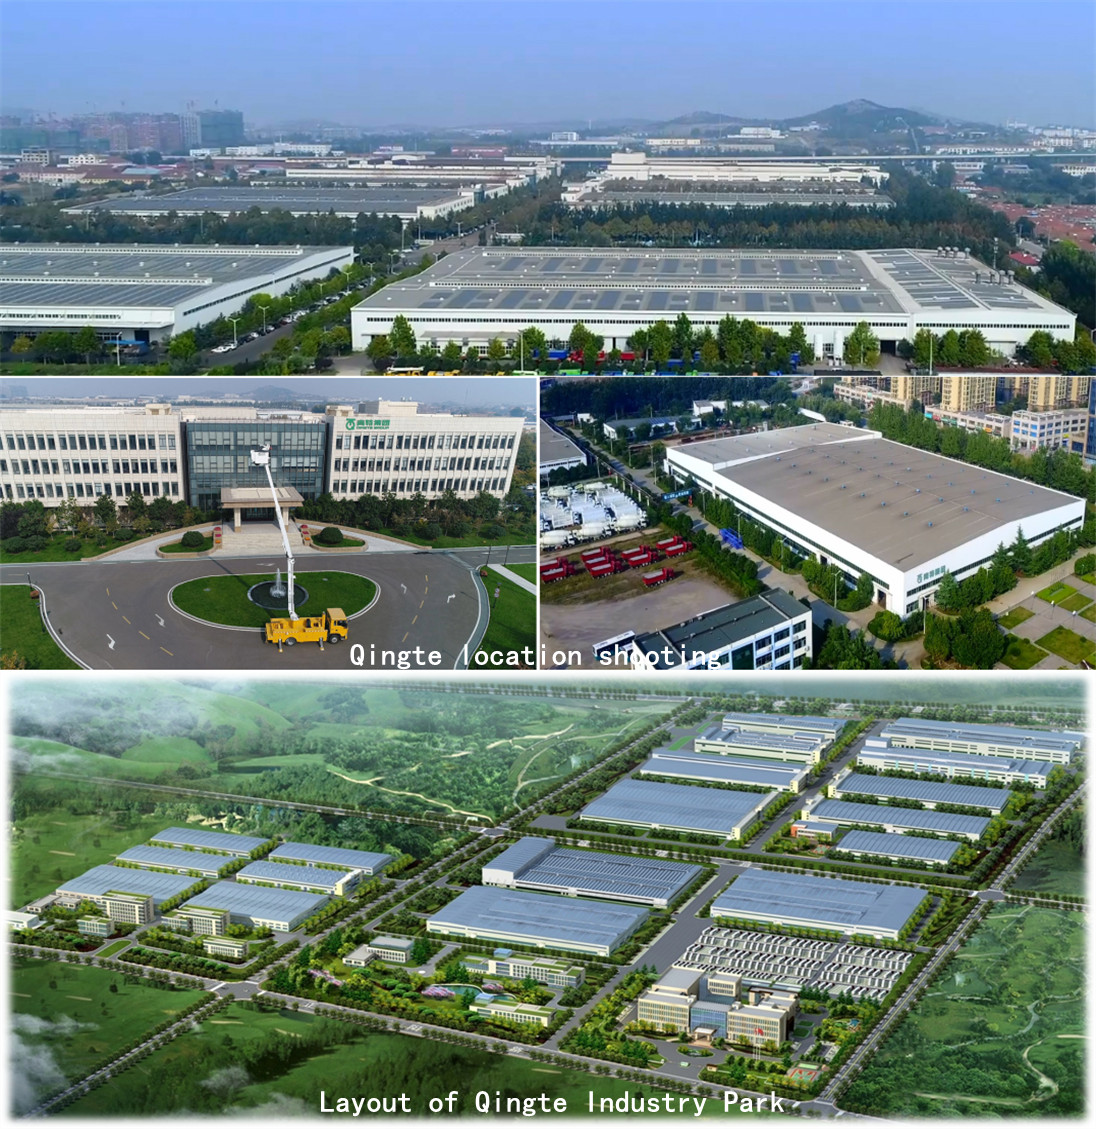 Qingte Group သည် ခုနစ်နှစ်ဆက်တိုက် "China's Top 100 Auto Parts Enterprises" စာရင်းတွင် ပါဝင်ခဲ့သည်။